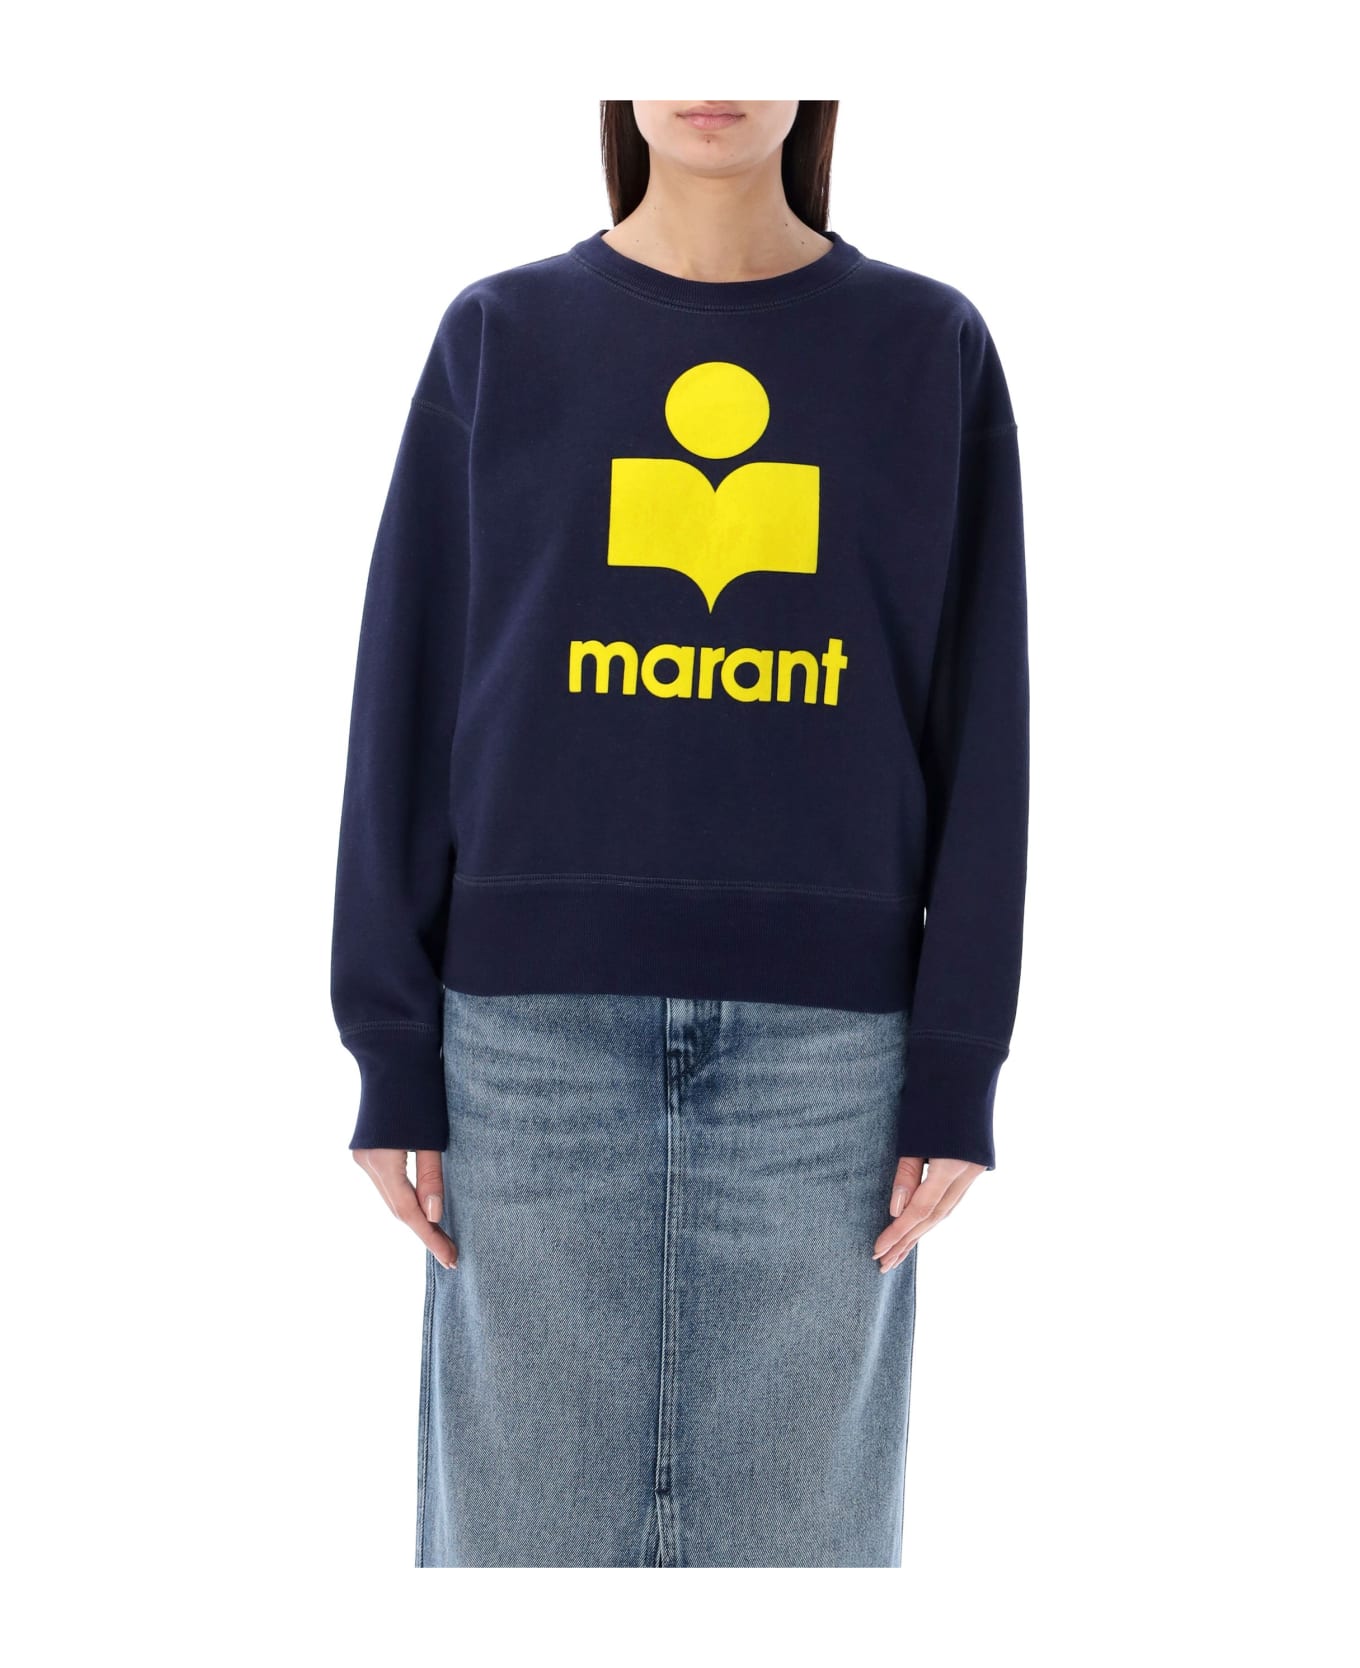 Marant Étoile Logo Printed Crewneck Sweatshirt - Navy/yellow